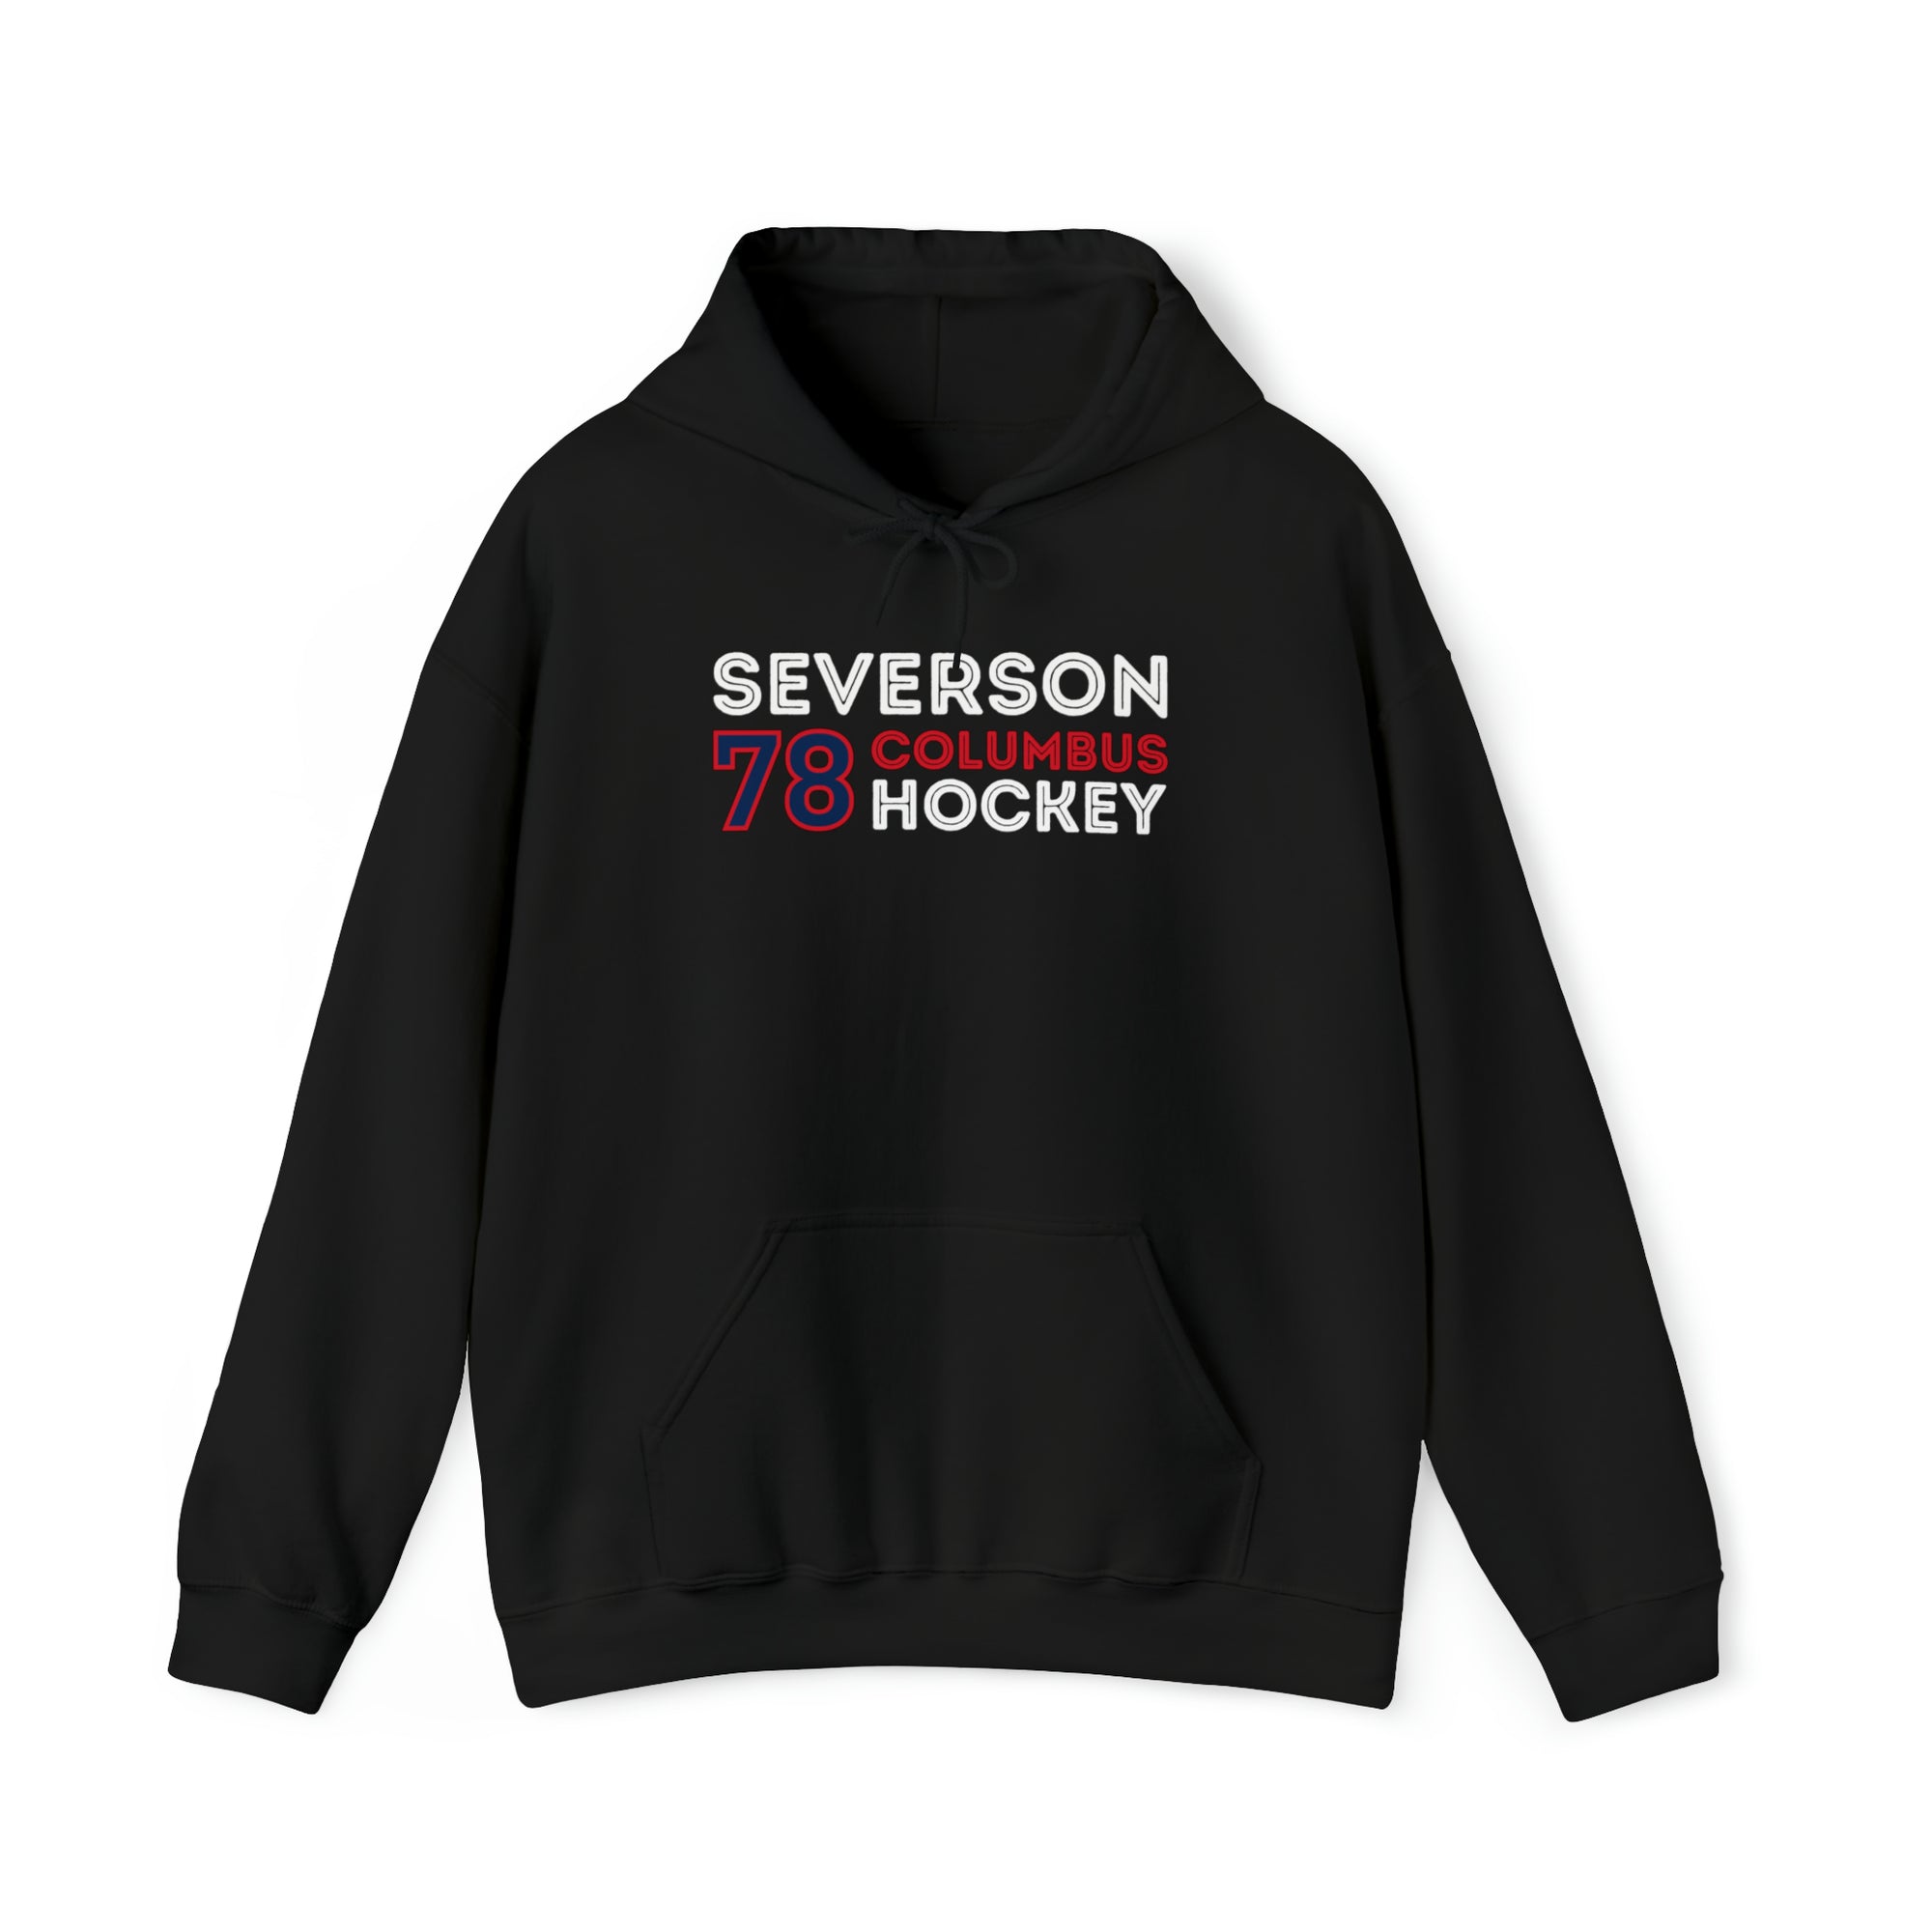 Severson 78 Columbus Hockey Grafitti Wall Design Unisex Hooded Sweatshirt